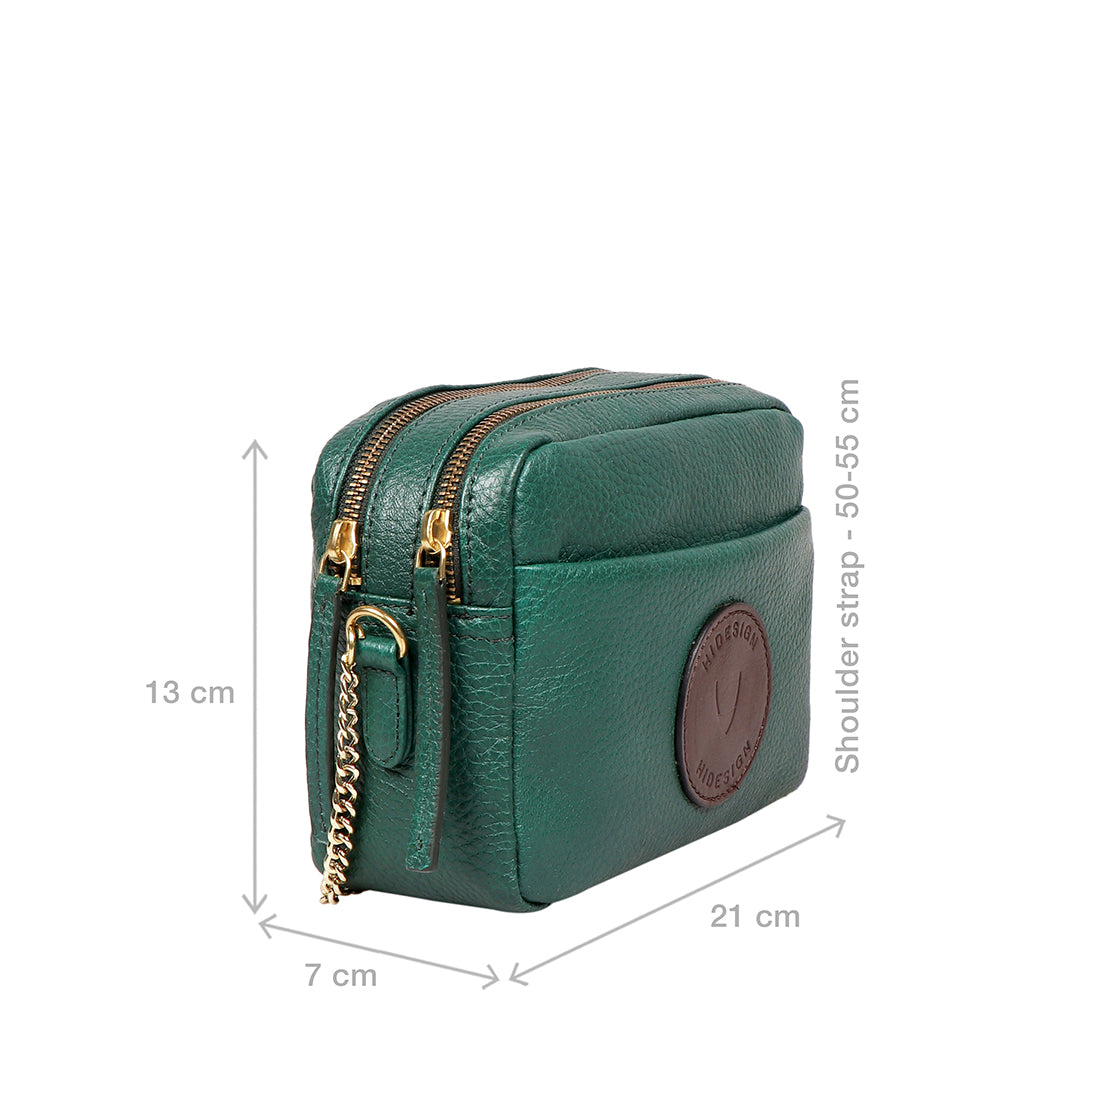 Buy Marsala Acacia 01 Sling Bag Online - Hidesign